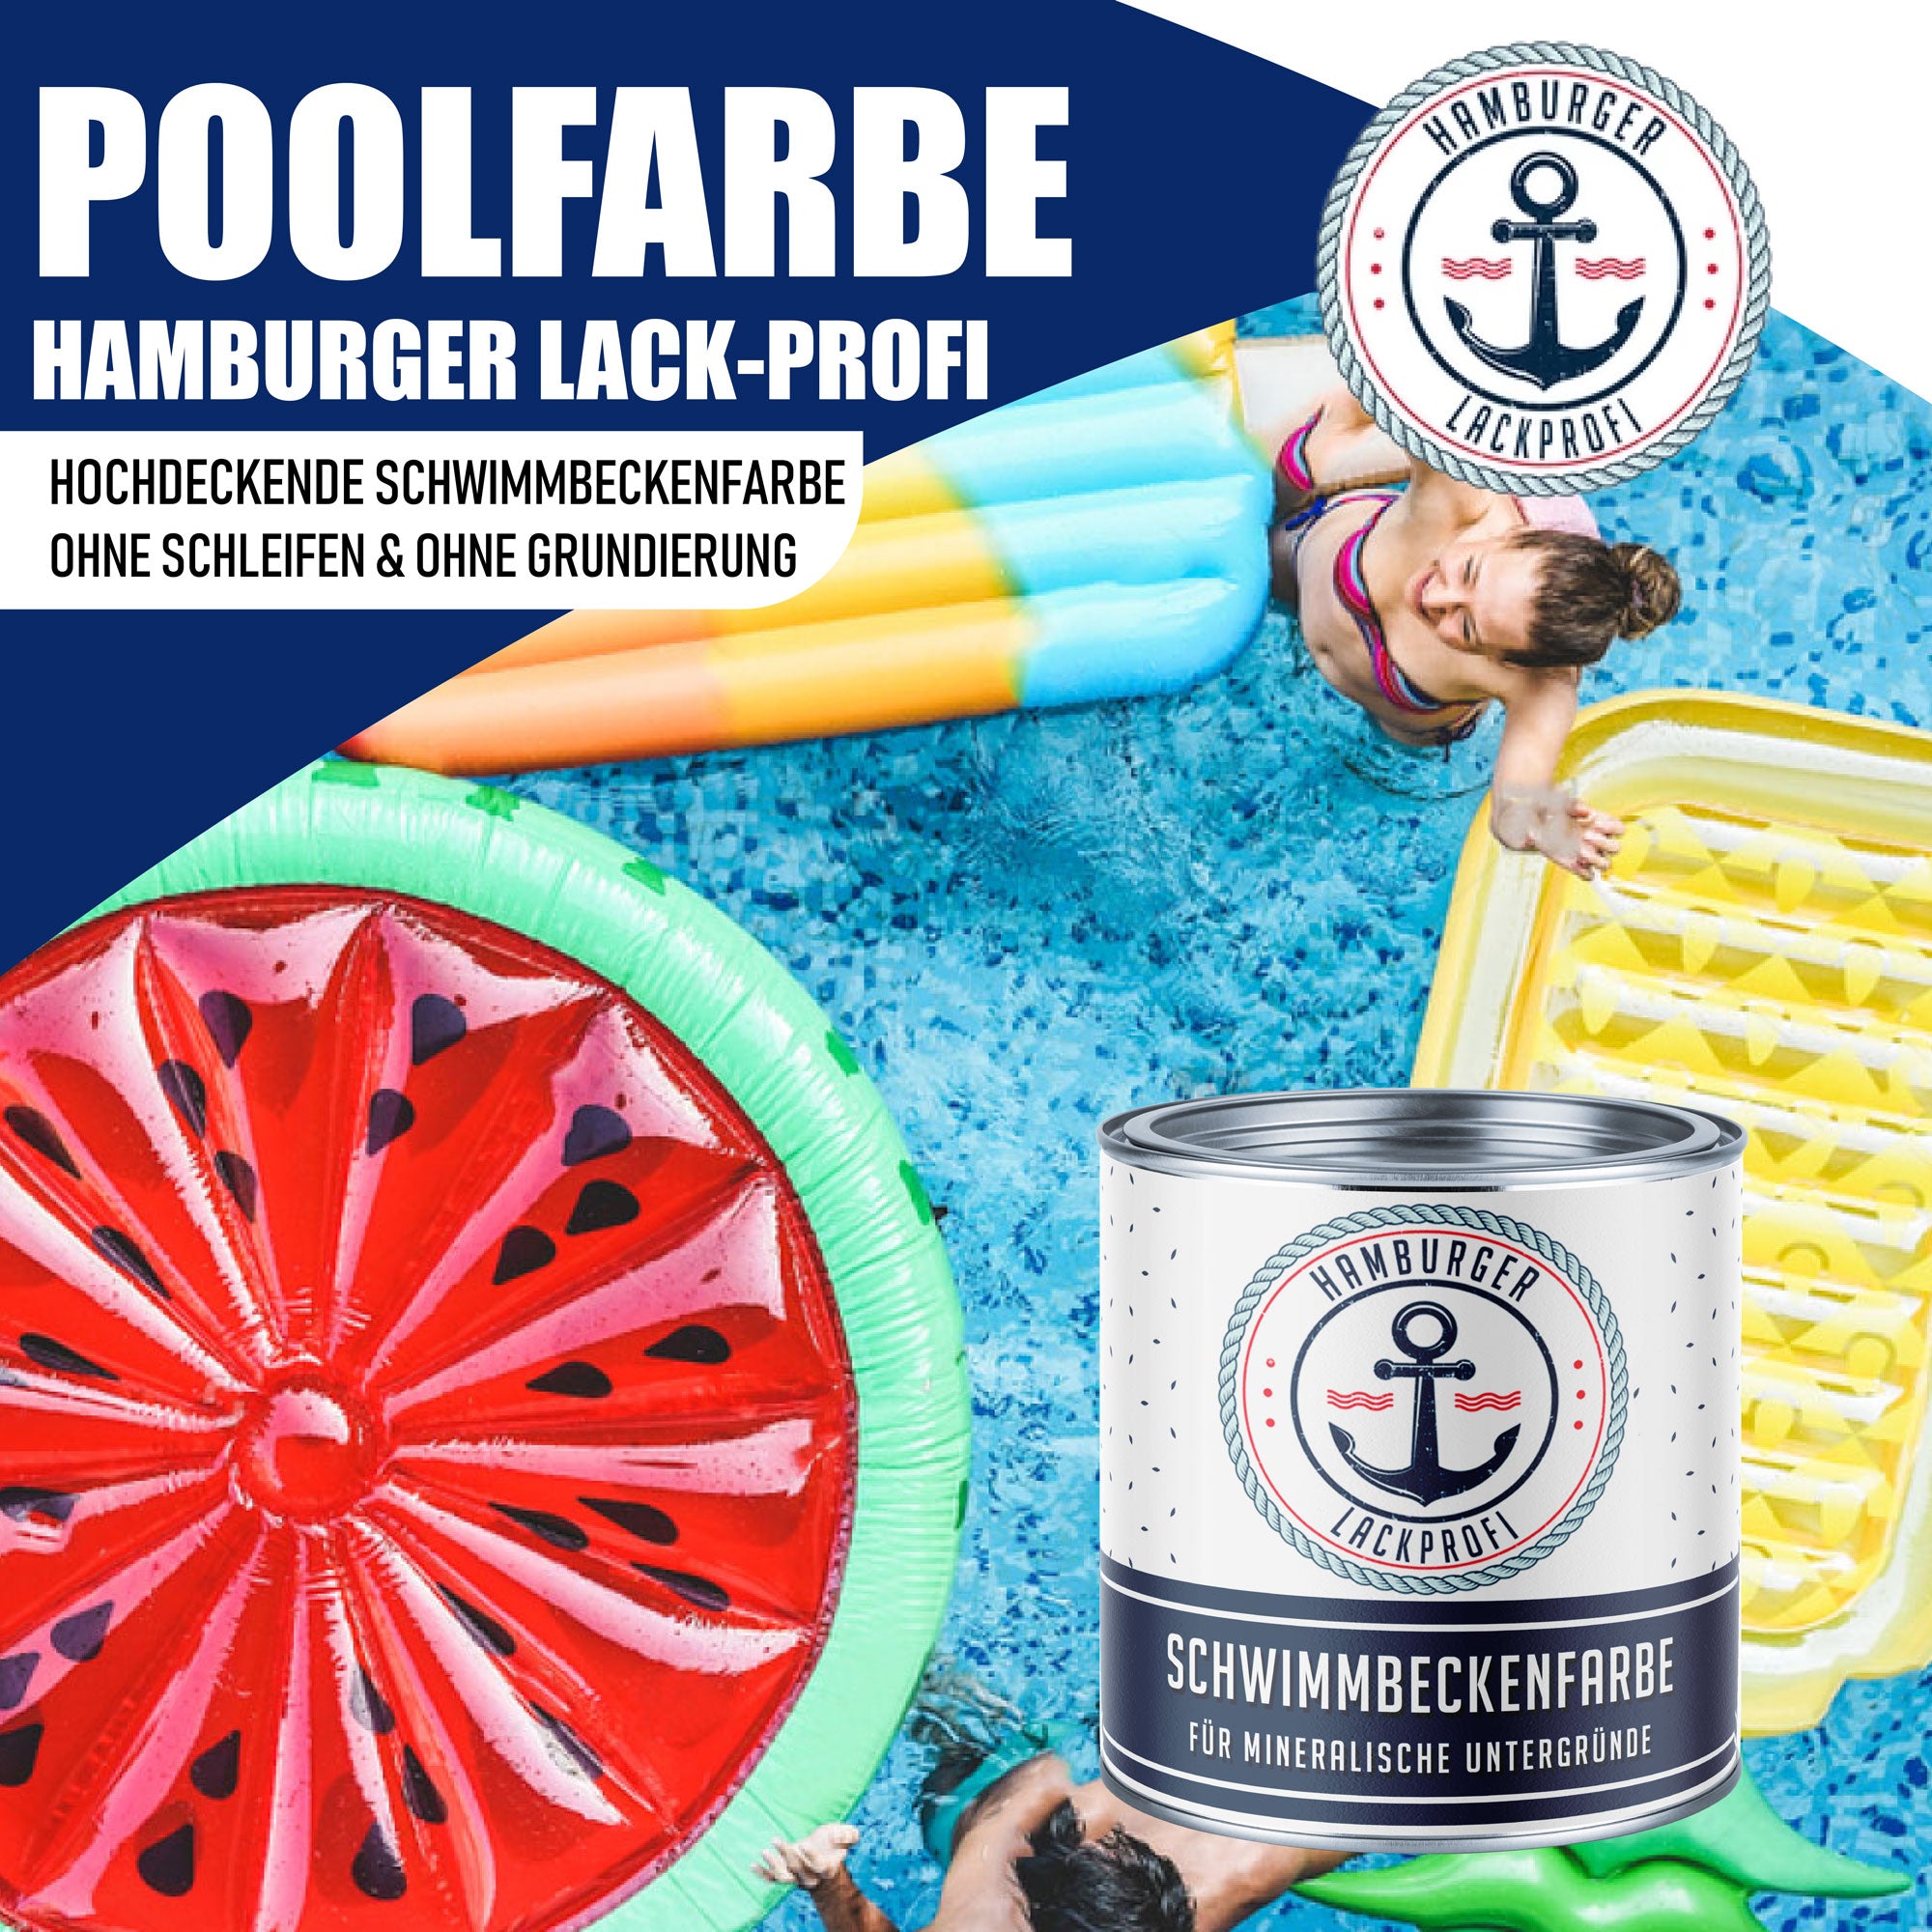 Hamburger Lack-Profi Schwimmbeckenfarbe - hochdeckende Poolfarbe - Hamburger Lack-Profi